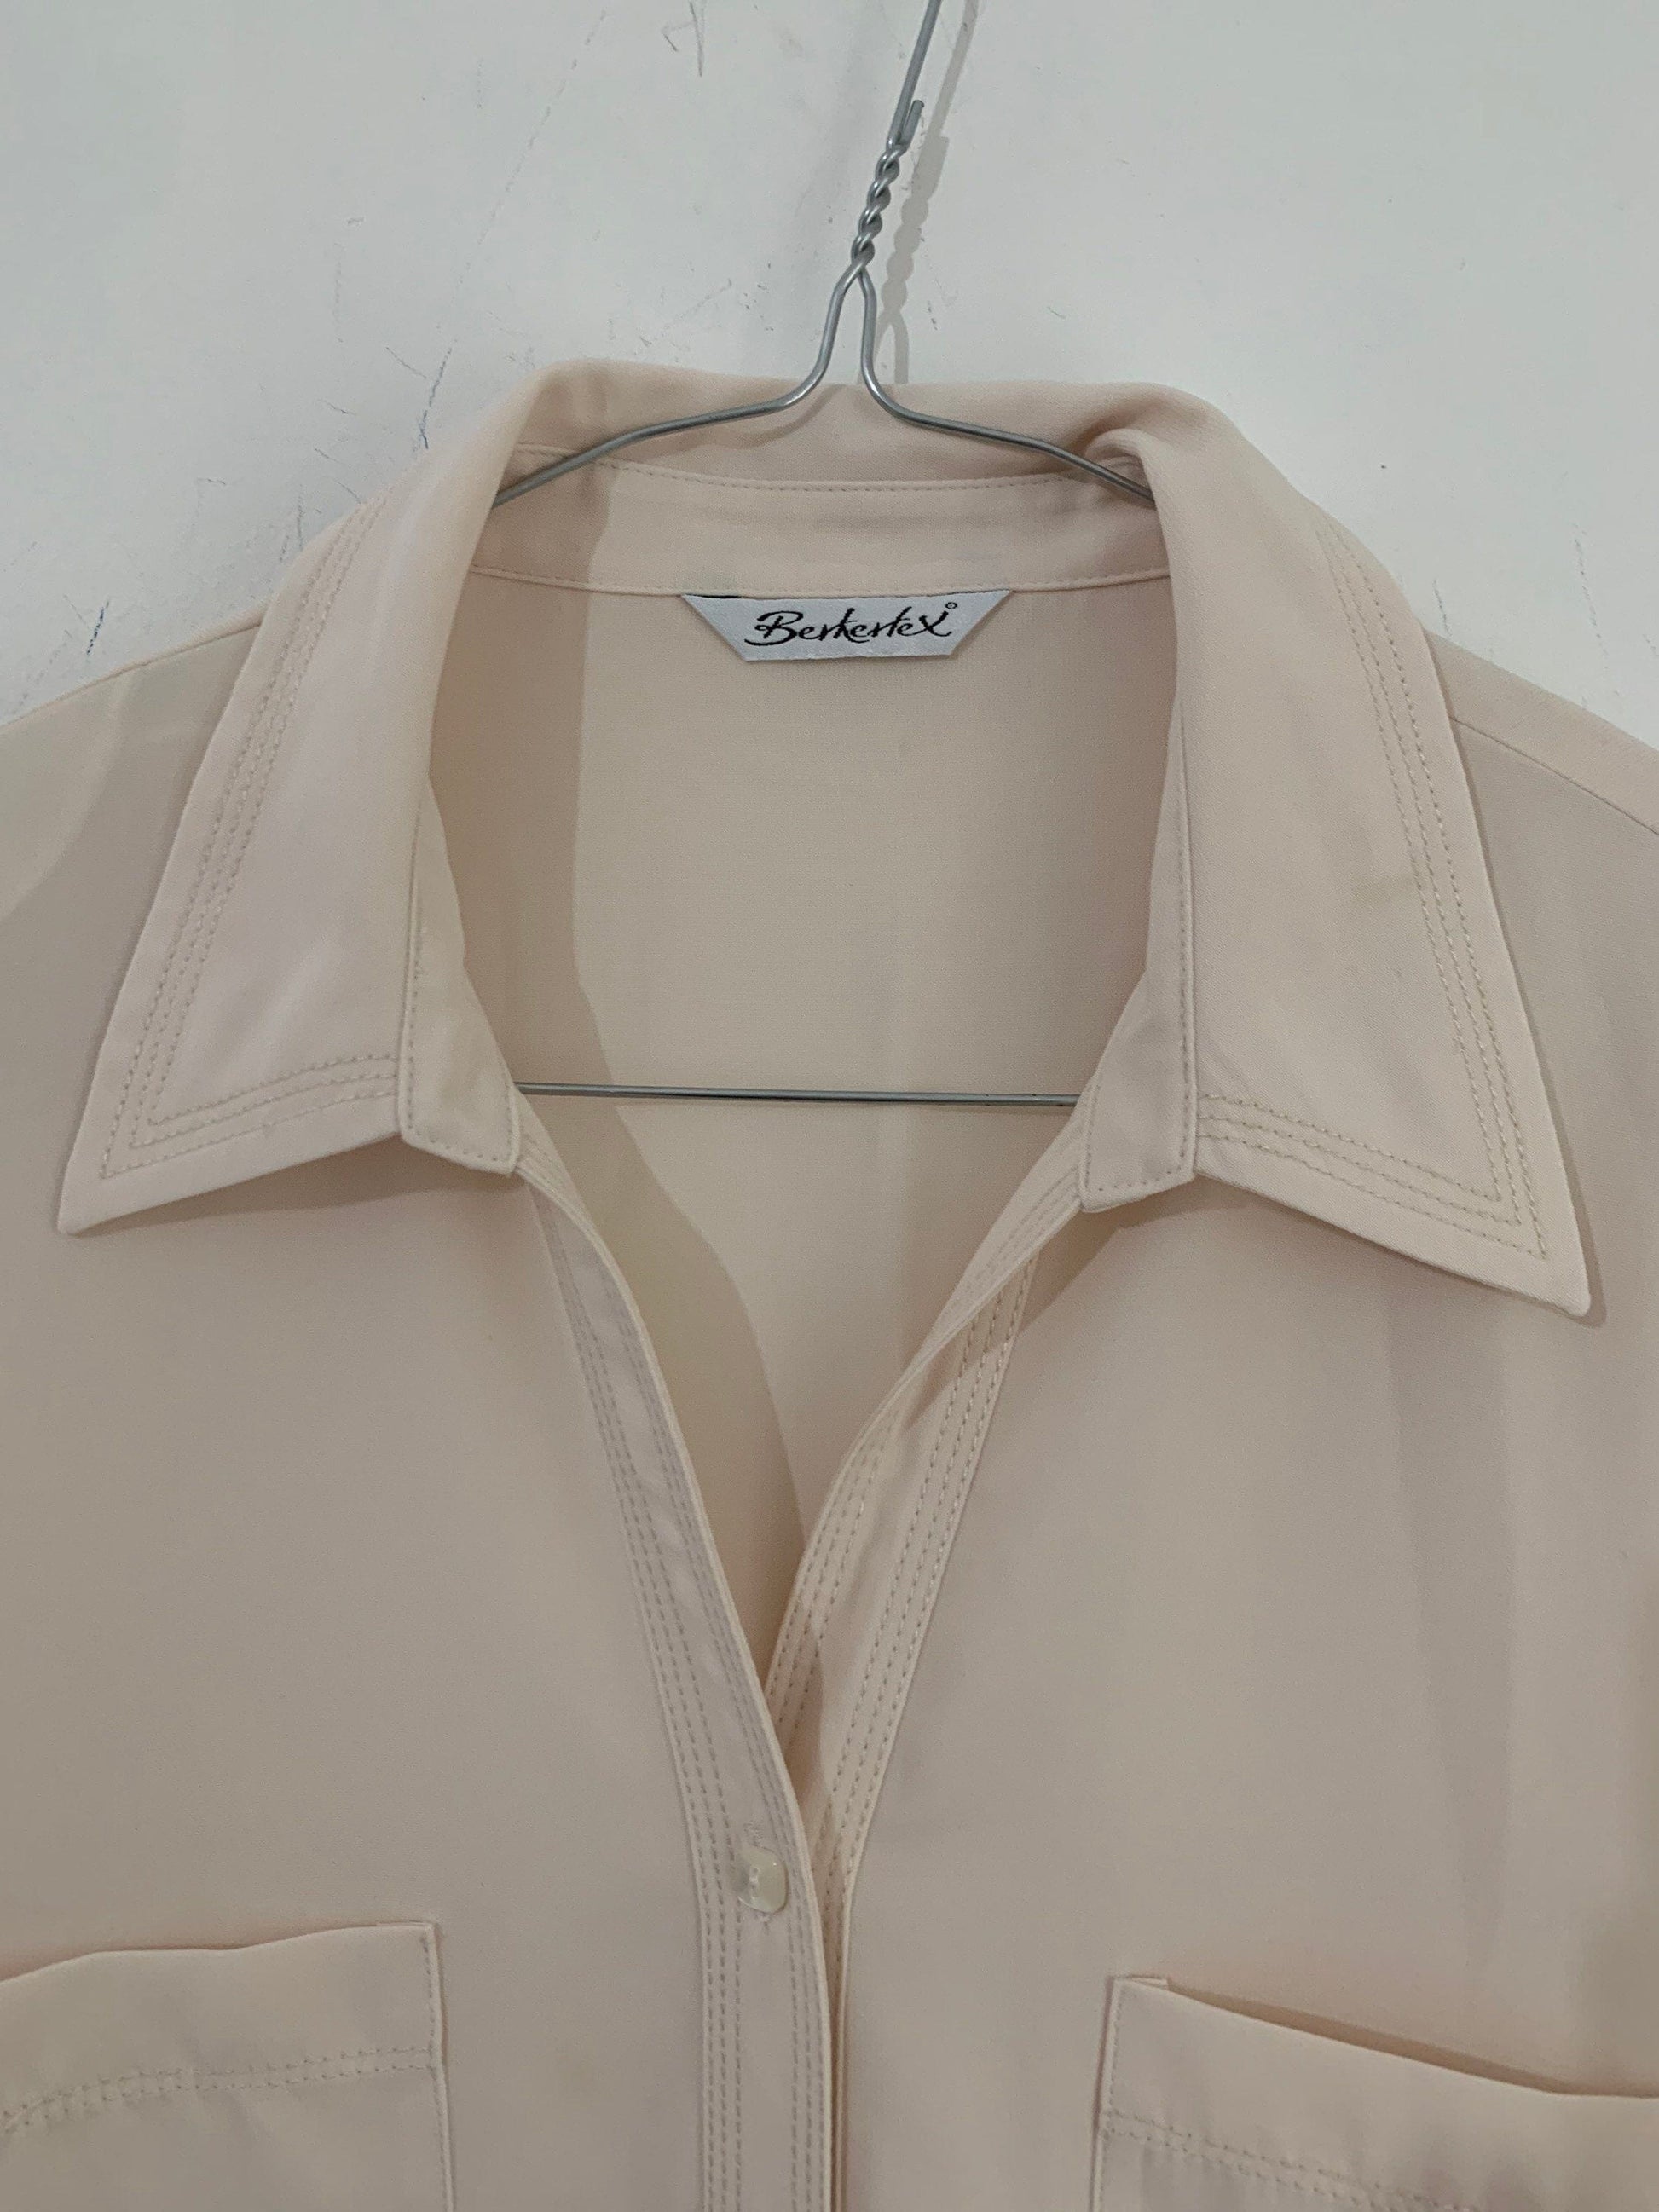 Cream Vintage Blouse Semi Sheer Button Through Boxy short Sleeves - Size 14